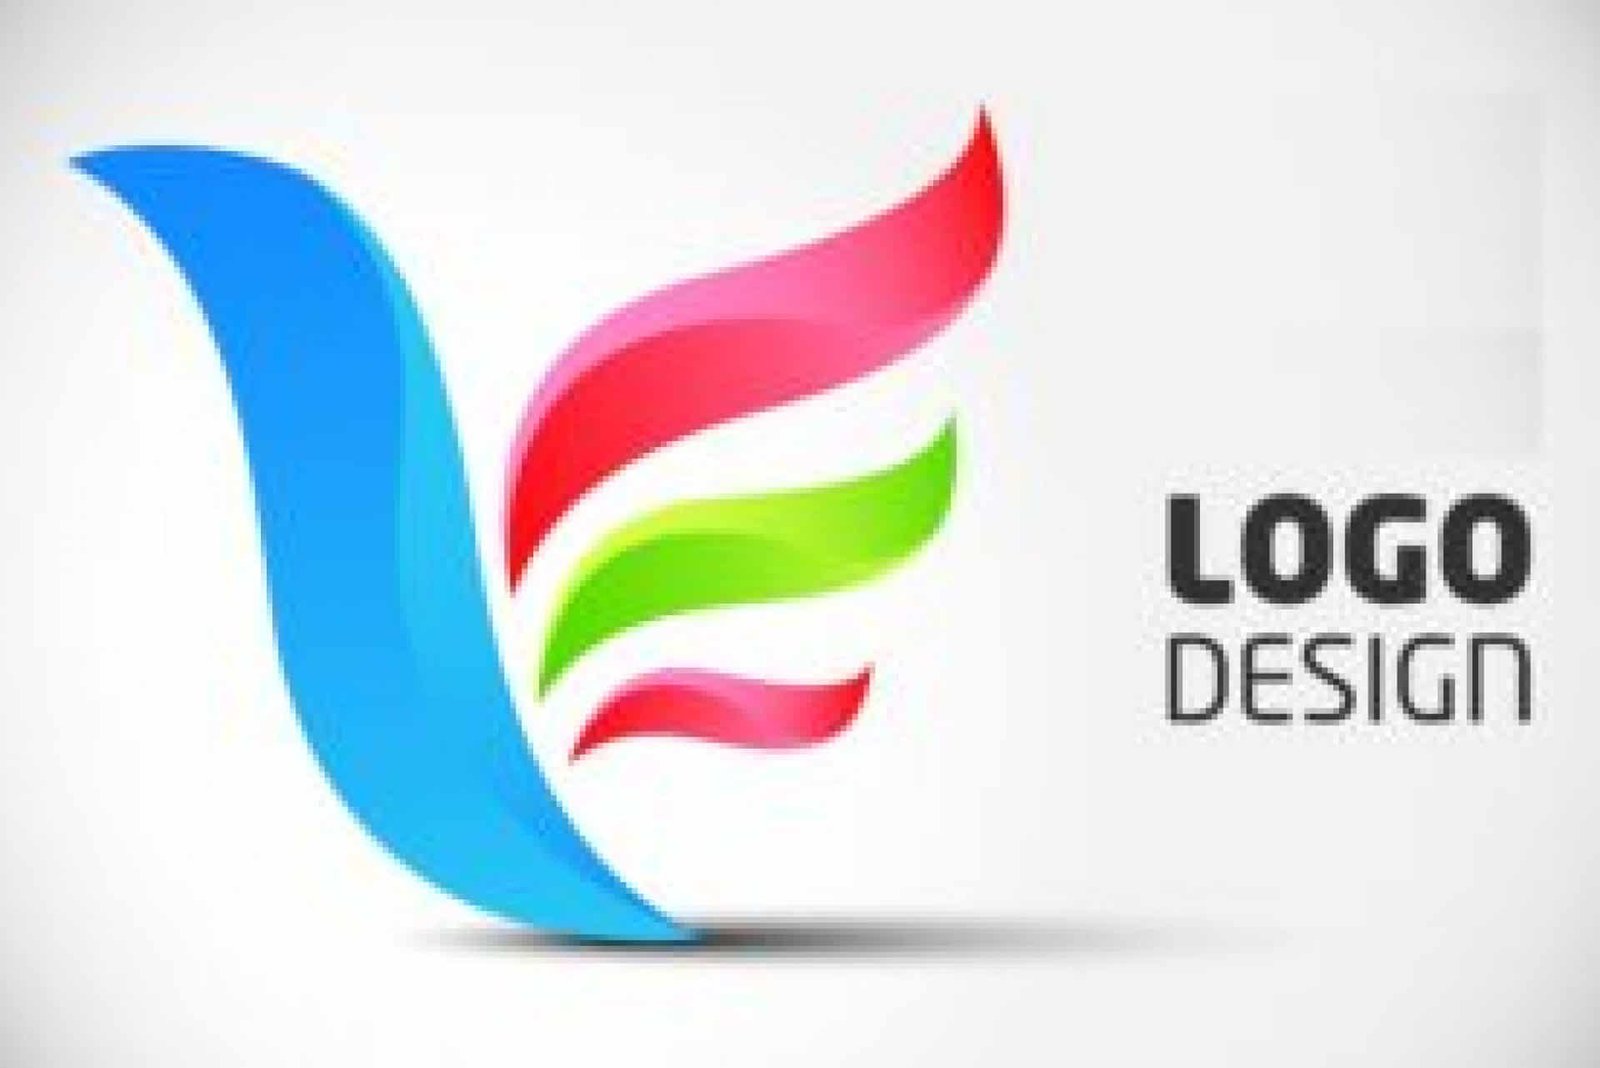 logo-designs